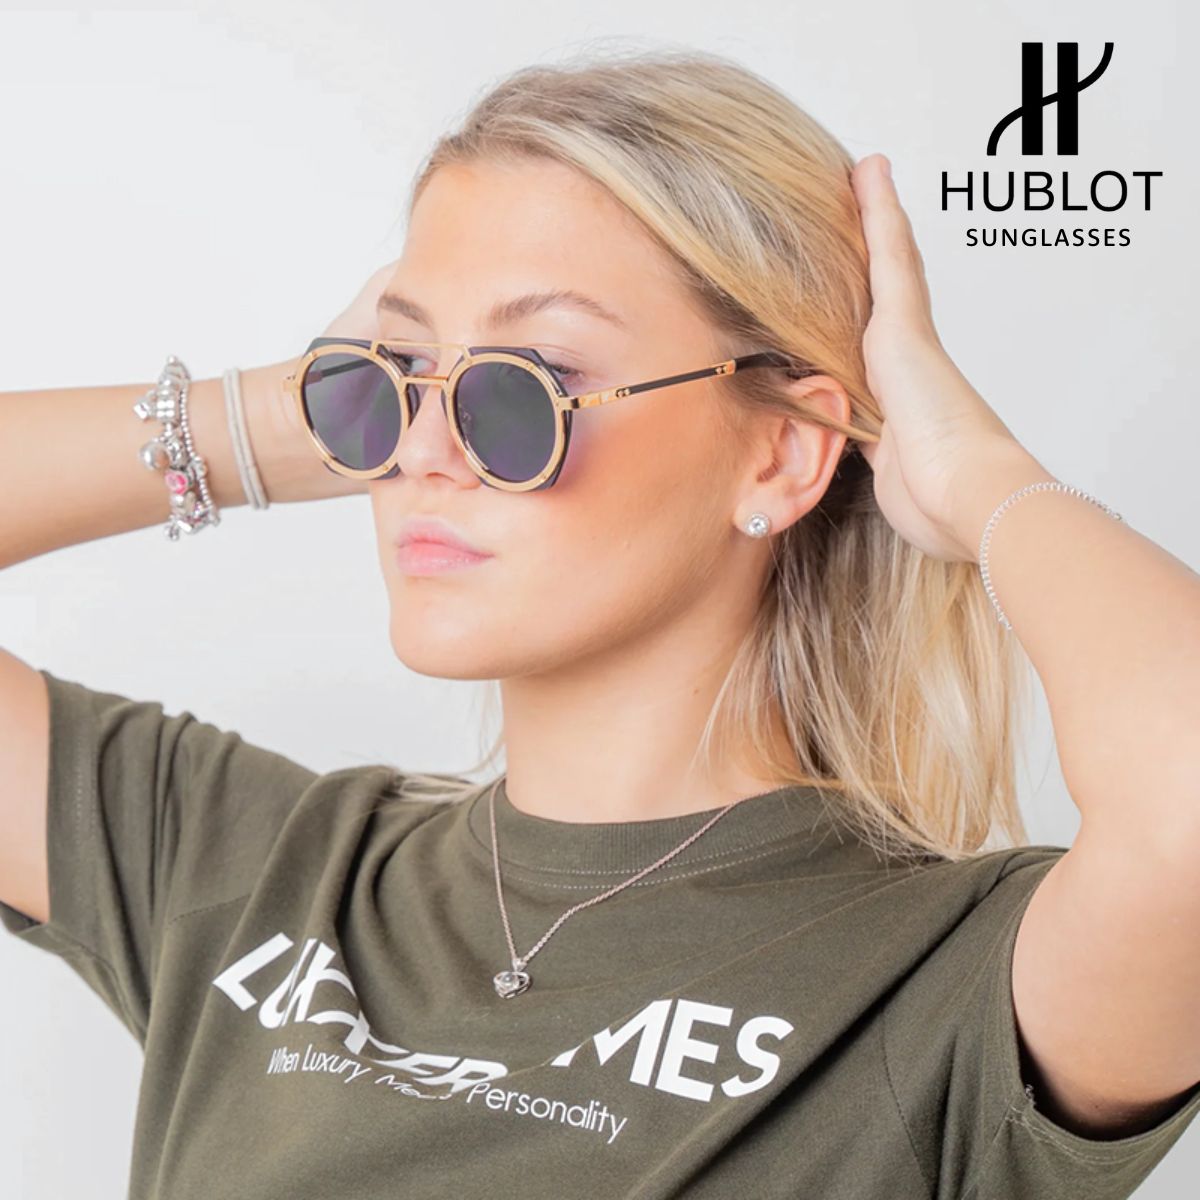 "Hublot sunglasses for both men and women at Optorium"